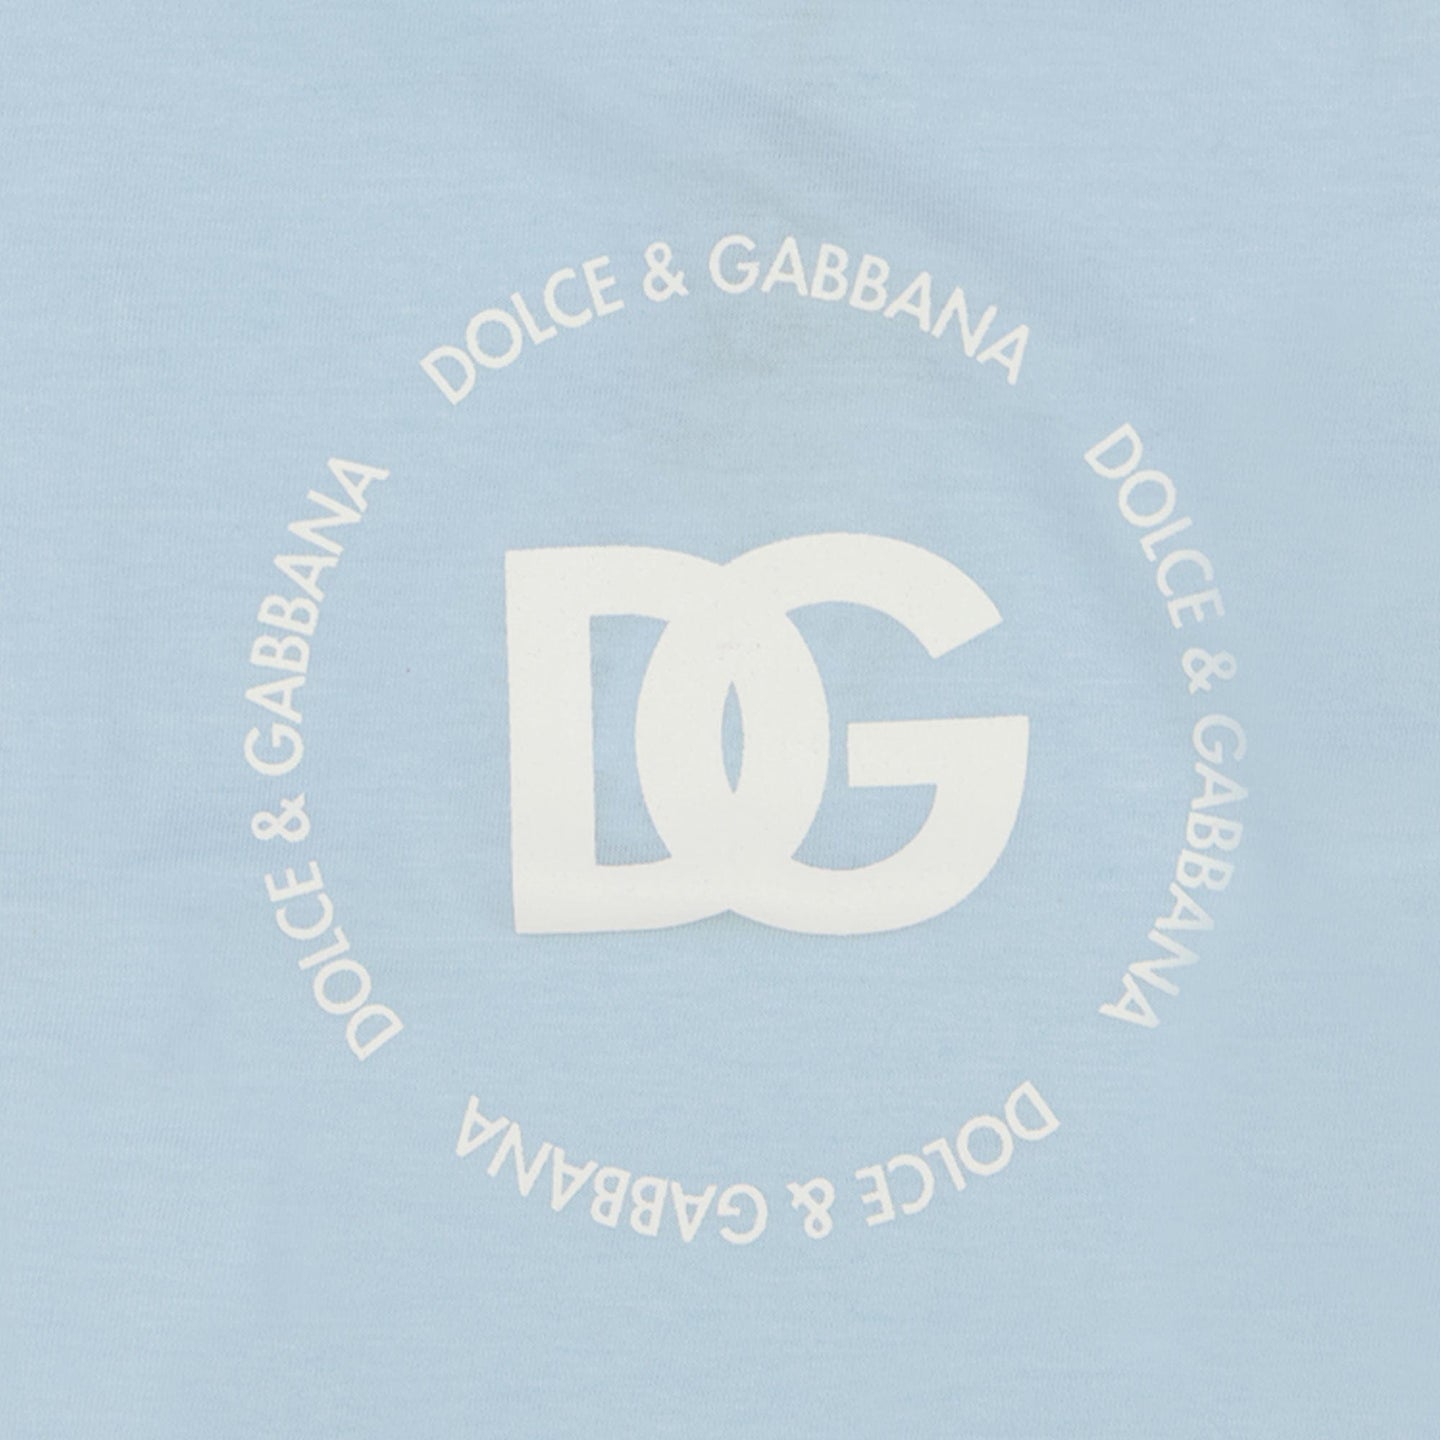 Dolce & Gabbana Baby Jongens T-Shirt Licht Blauw 3/6